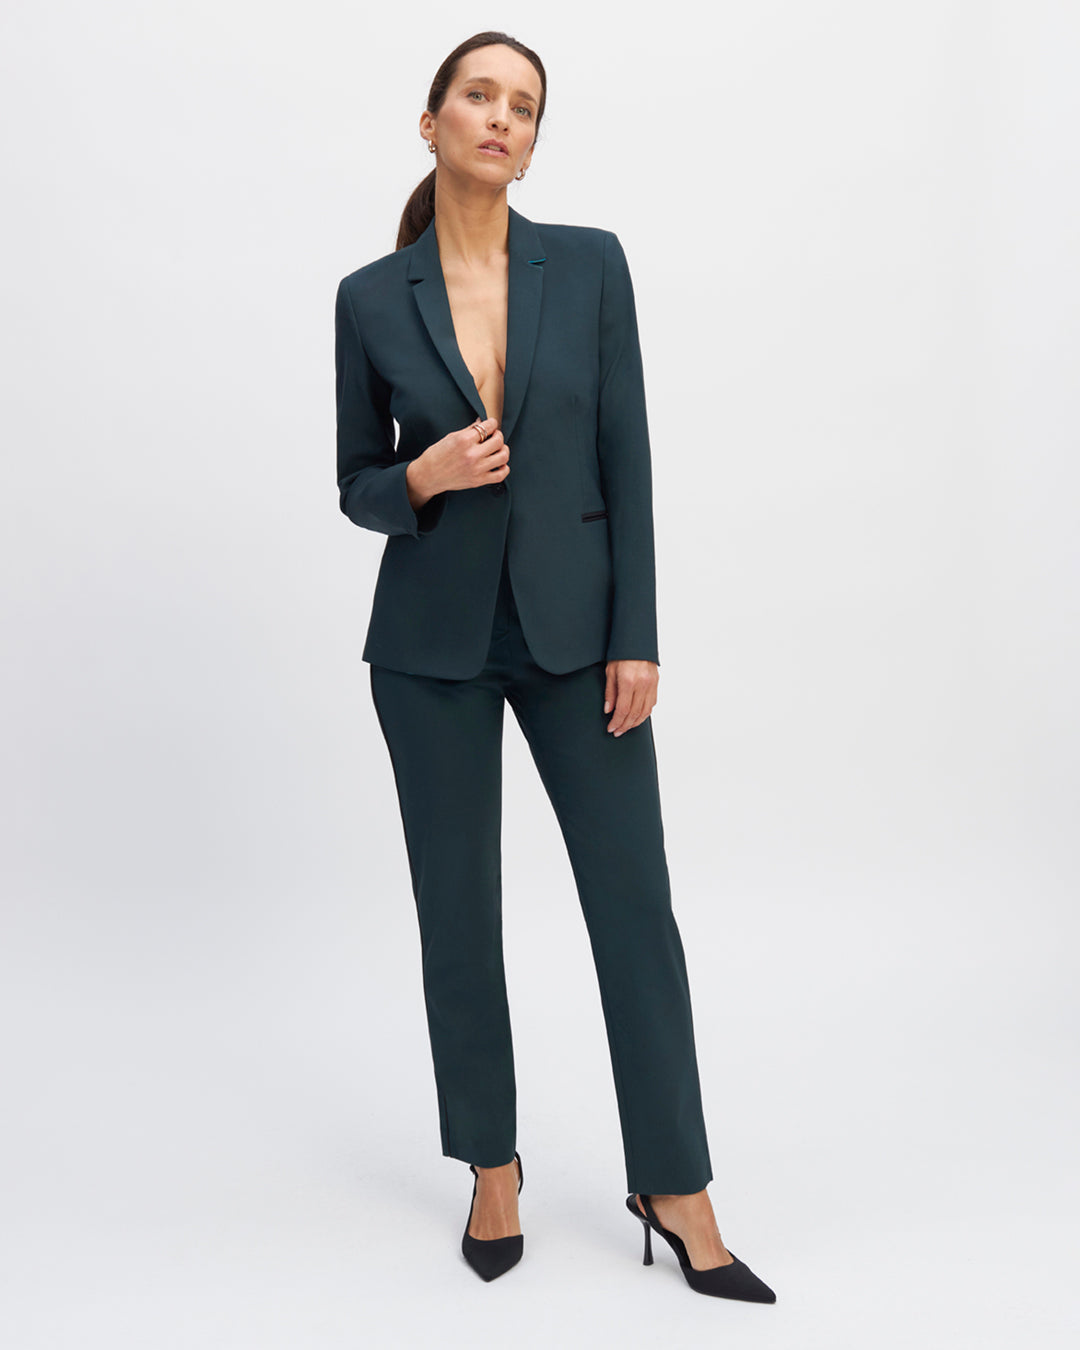 Jacket-suit-blazer-green-cut-suit-collar-suit-length-below-bottom-two-pockets-under-bottom-two-pockets-17H10-suit-jacket-for-women-paris-